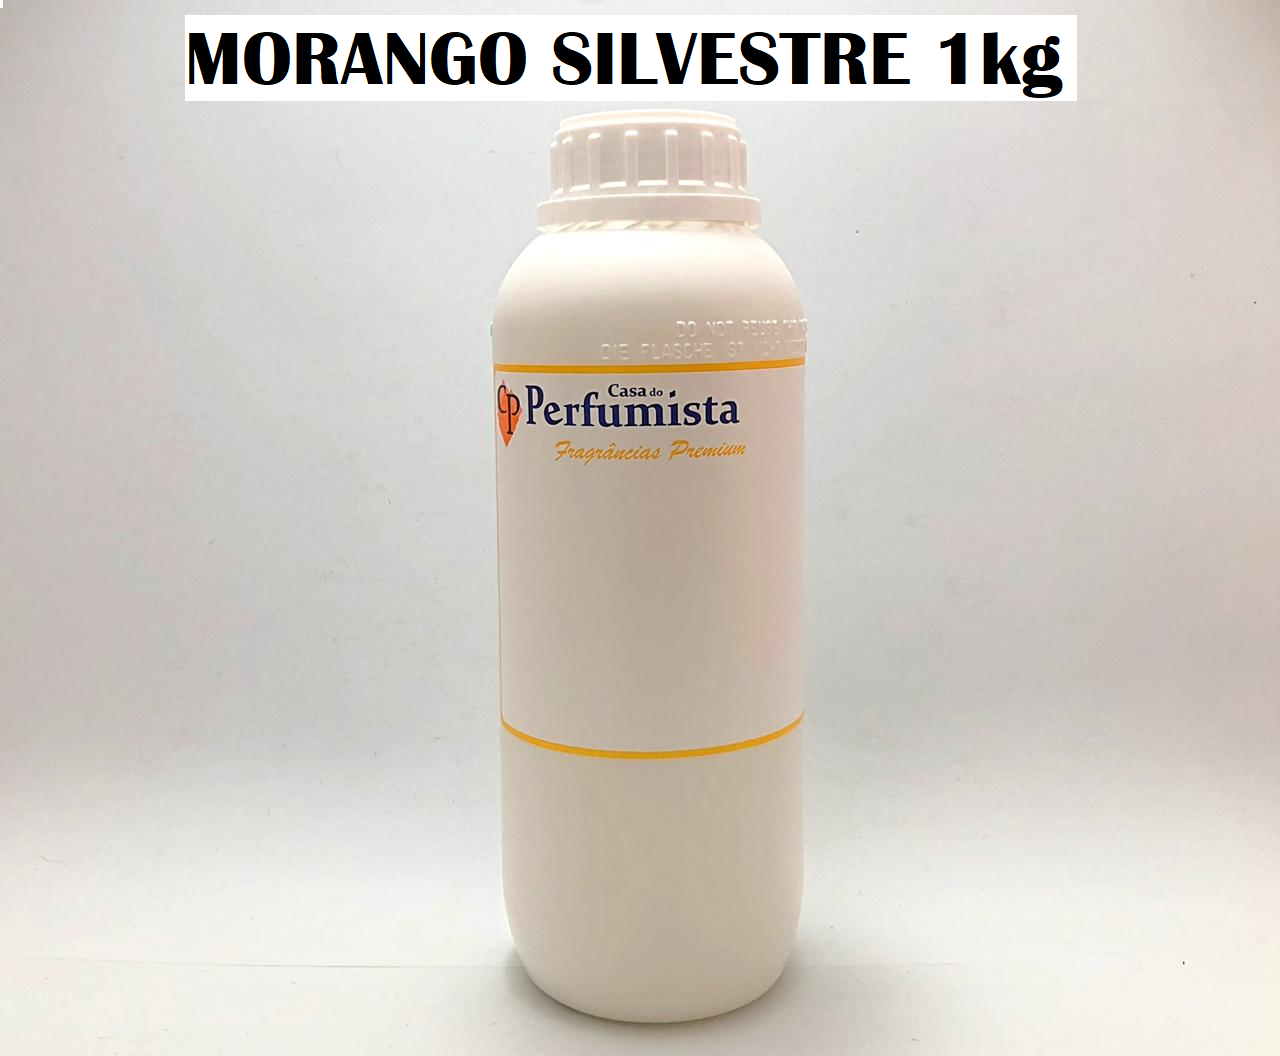 MORANGO SILVESTRE - 1kg